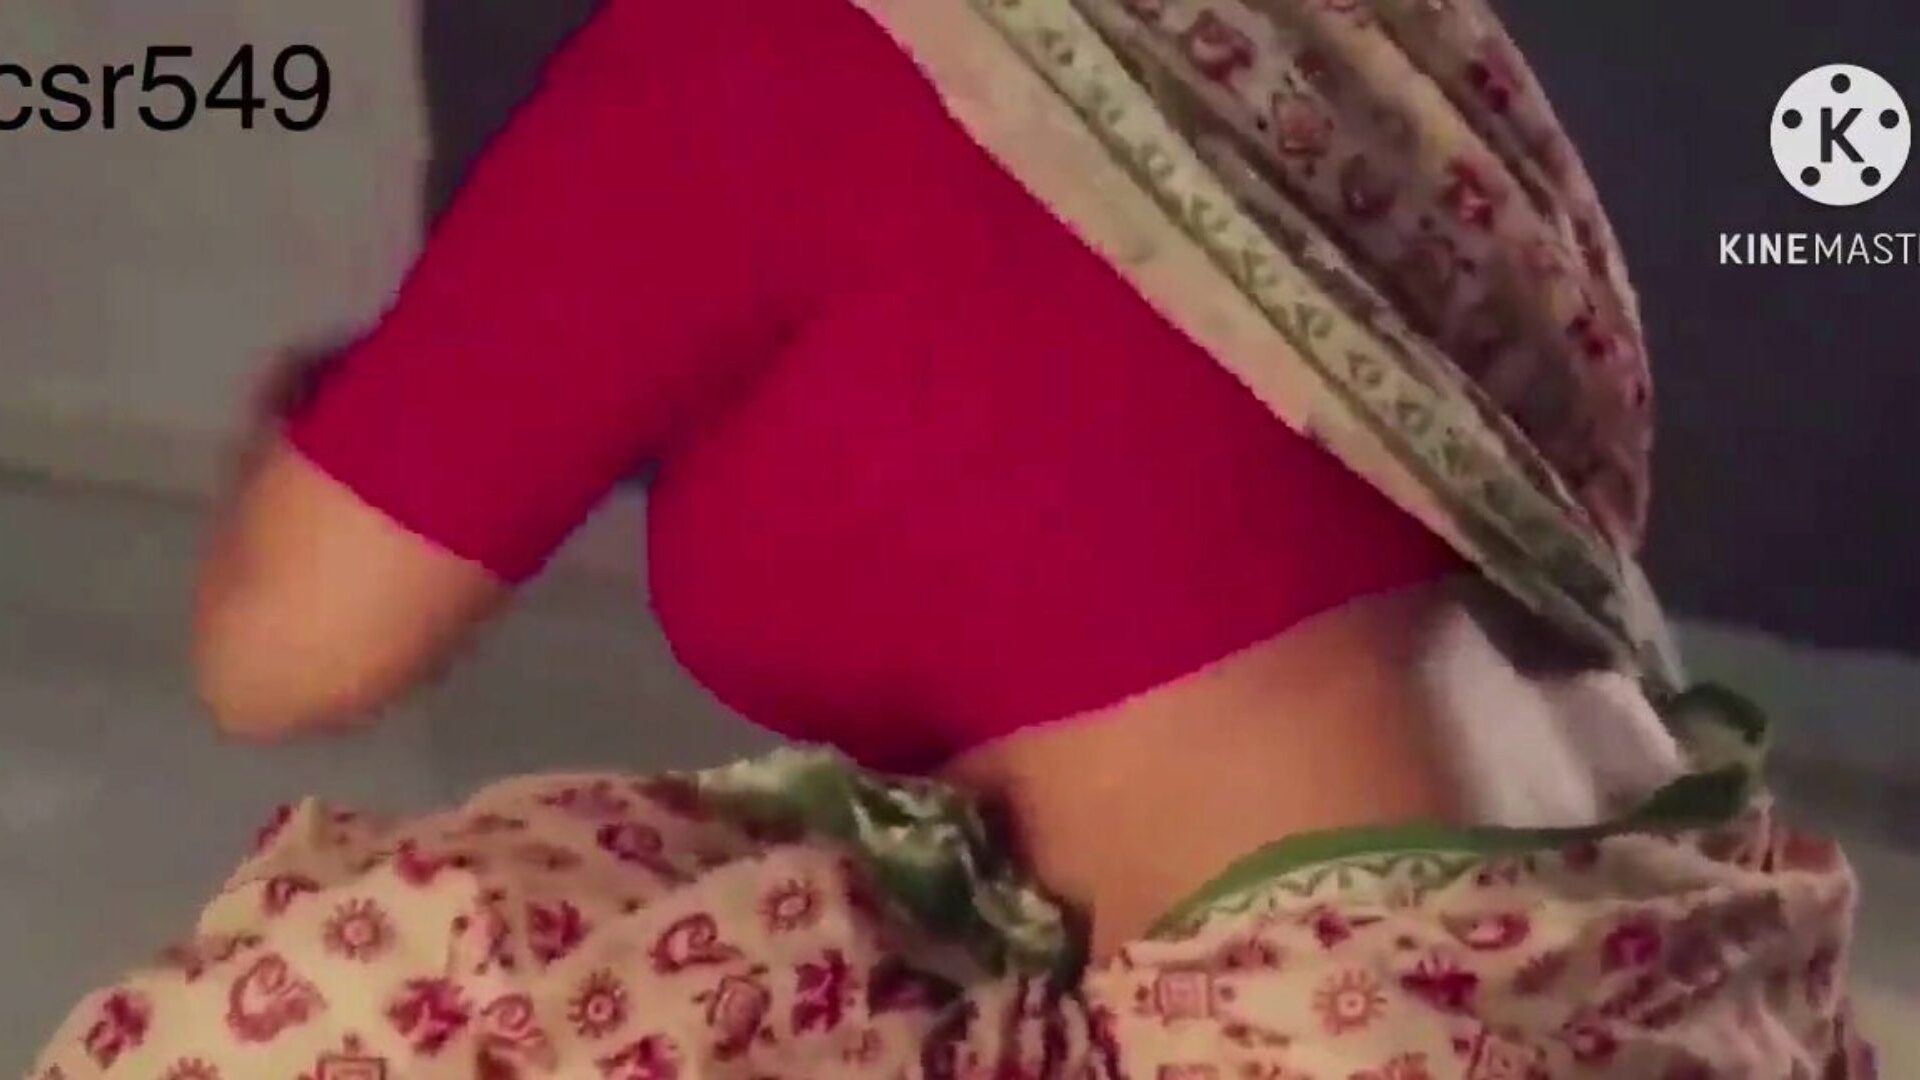 desi sexy n šťavnaté červené saree ženy v prdeli ... sledovat desi sexy a šťavnaté žena v červené saree v prdeli podle služebníka film na xhamster - dokonalá databáze asijských indických HD porno videí vids